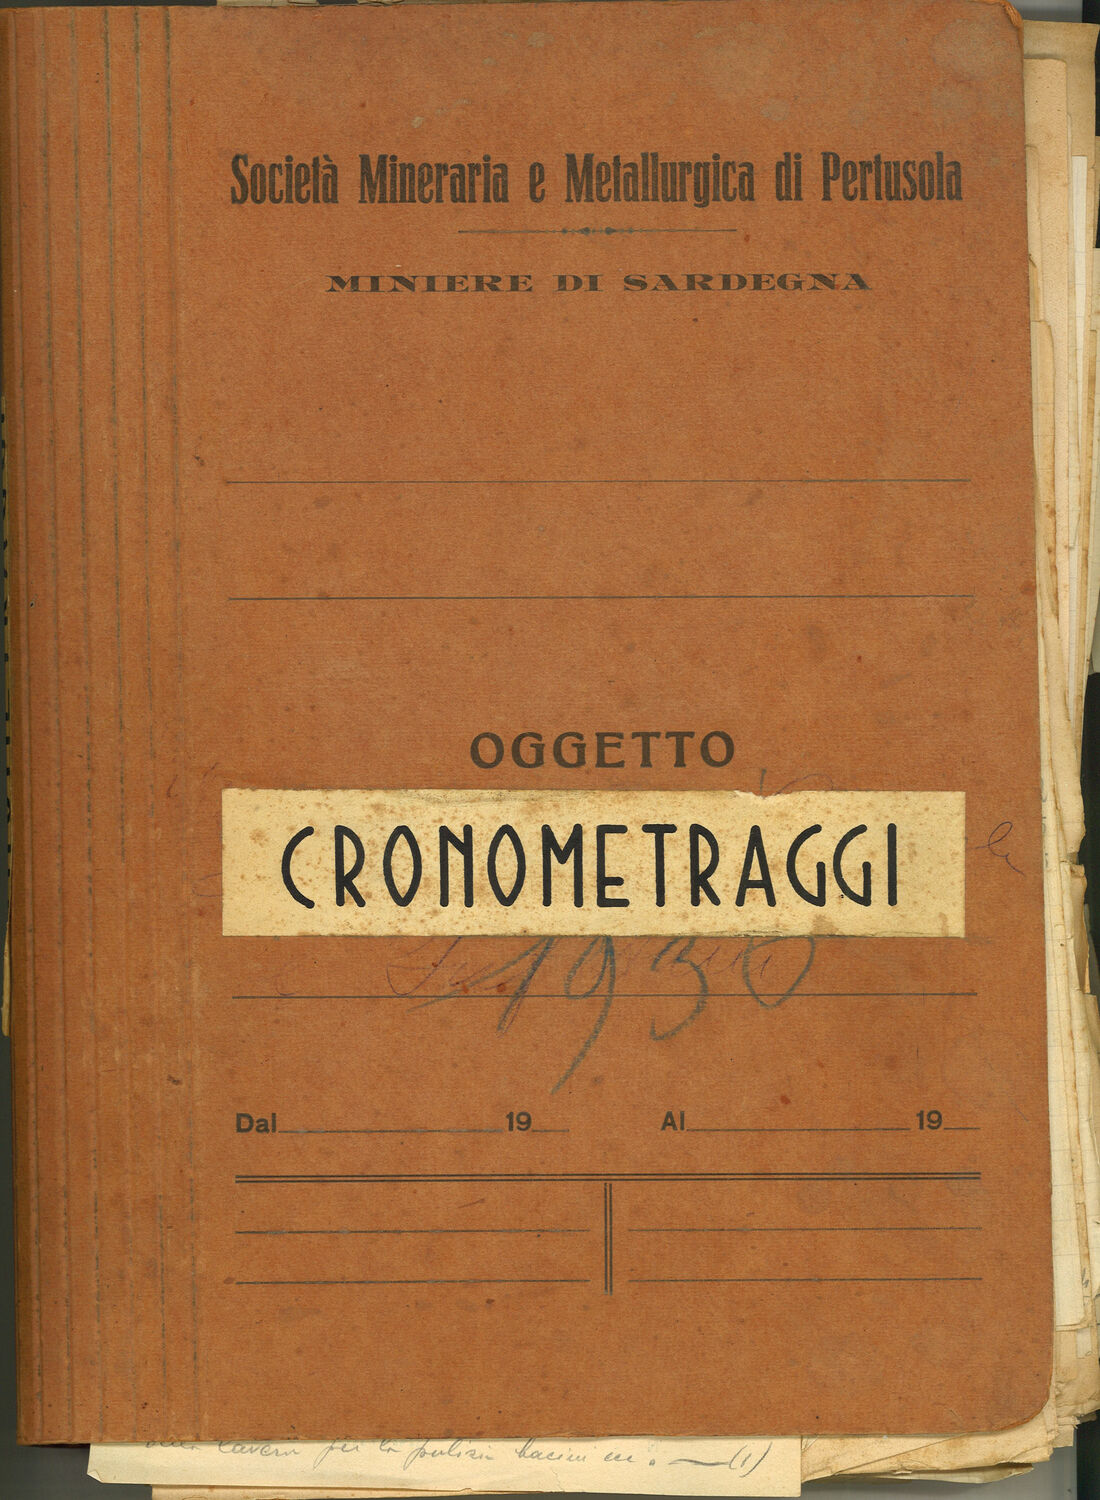 Cronometraggi – Fondo Pertusola, serie Bedaux Cottimi, 1930